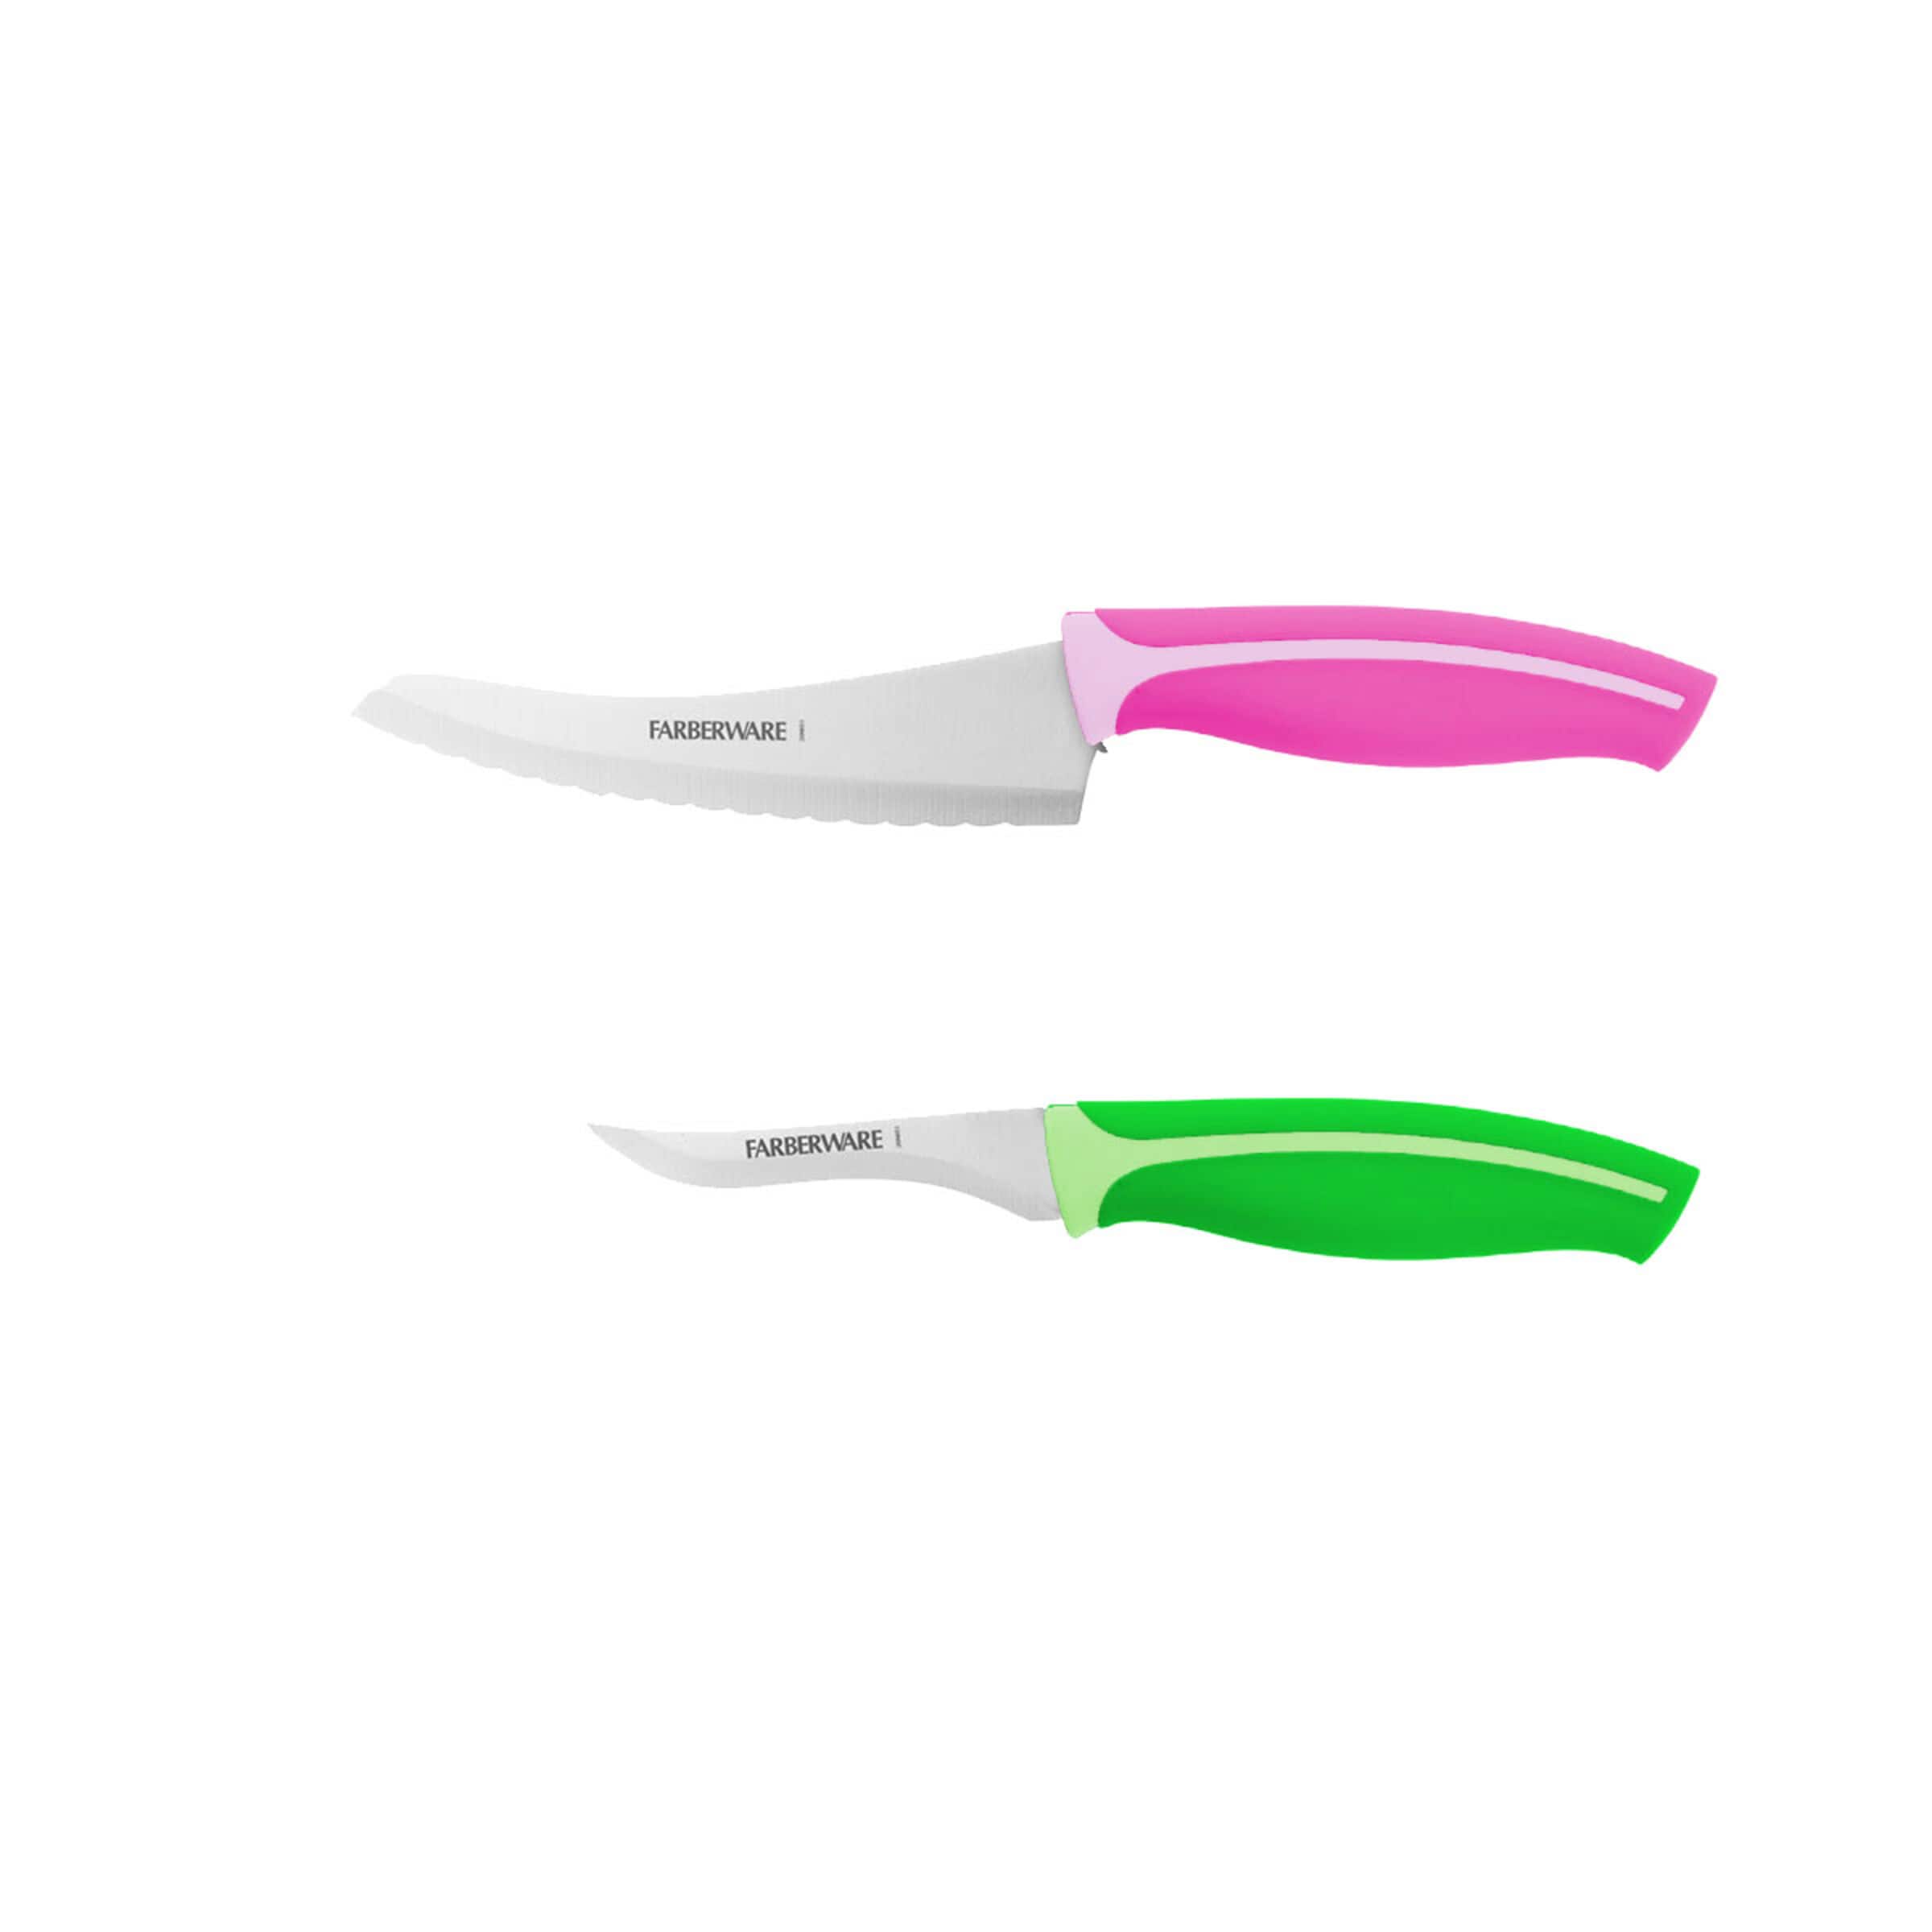 Farberware Precise 2-Piece Utility Knife Set